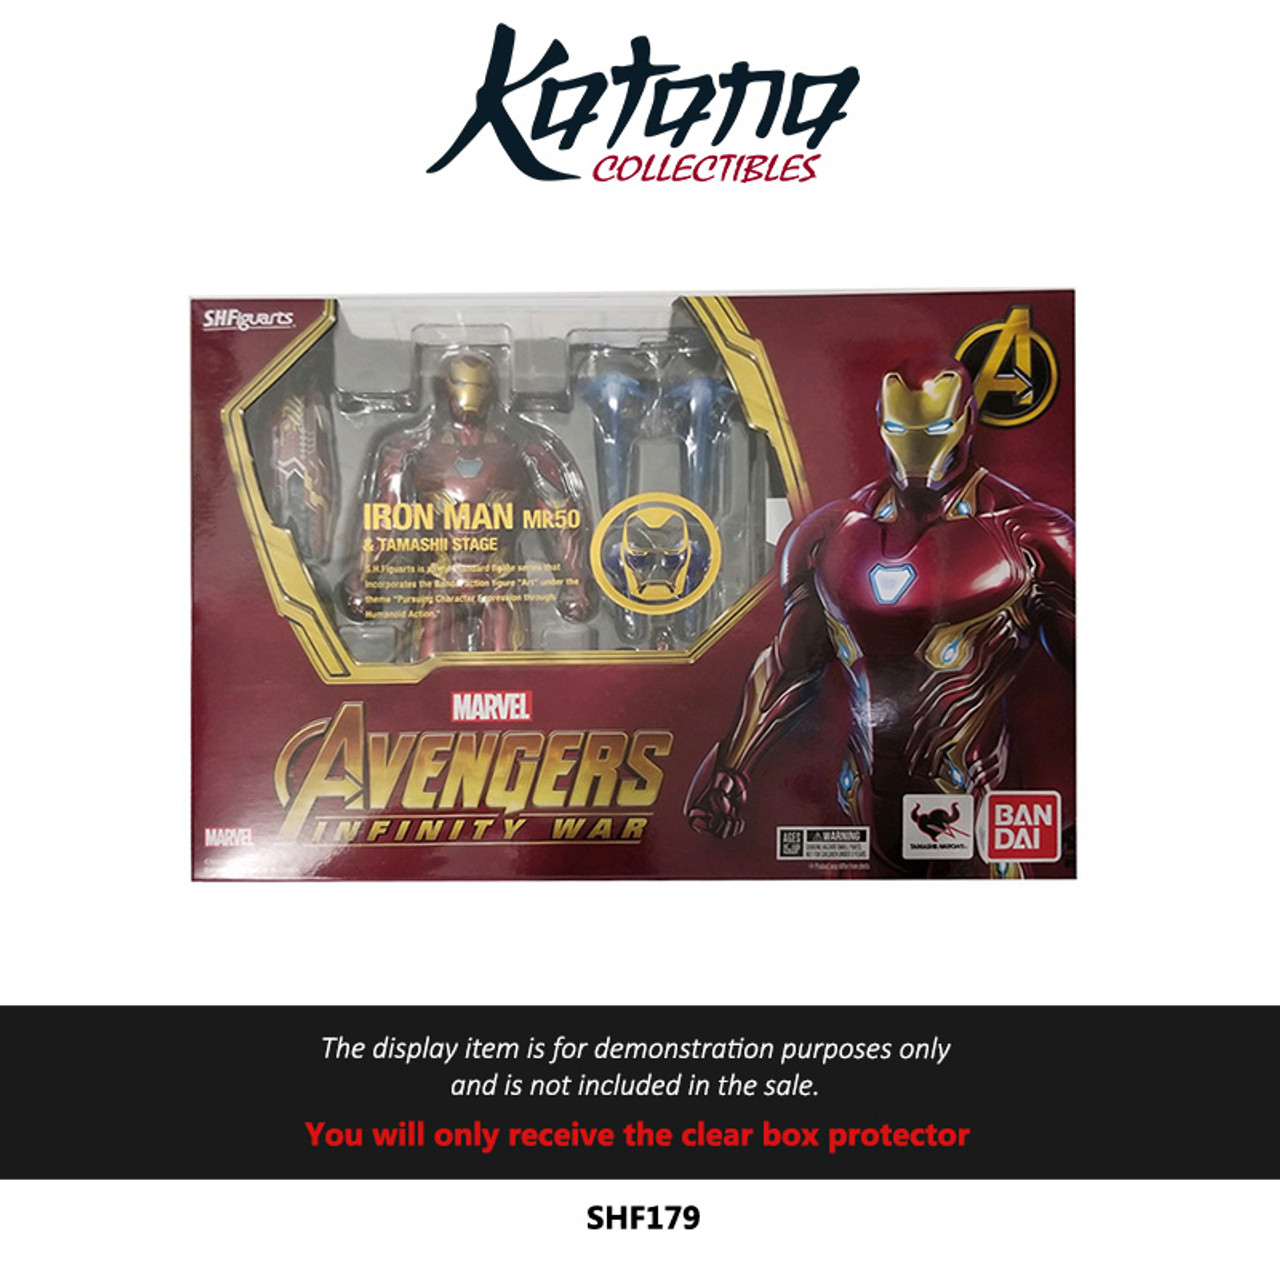 Katana Collectibles Protector For S.H.Figuarts Marvel Avengers Infinity War Iron Man Mark 50